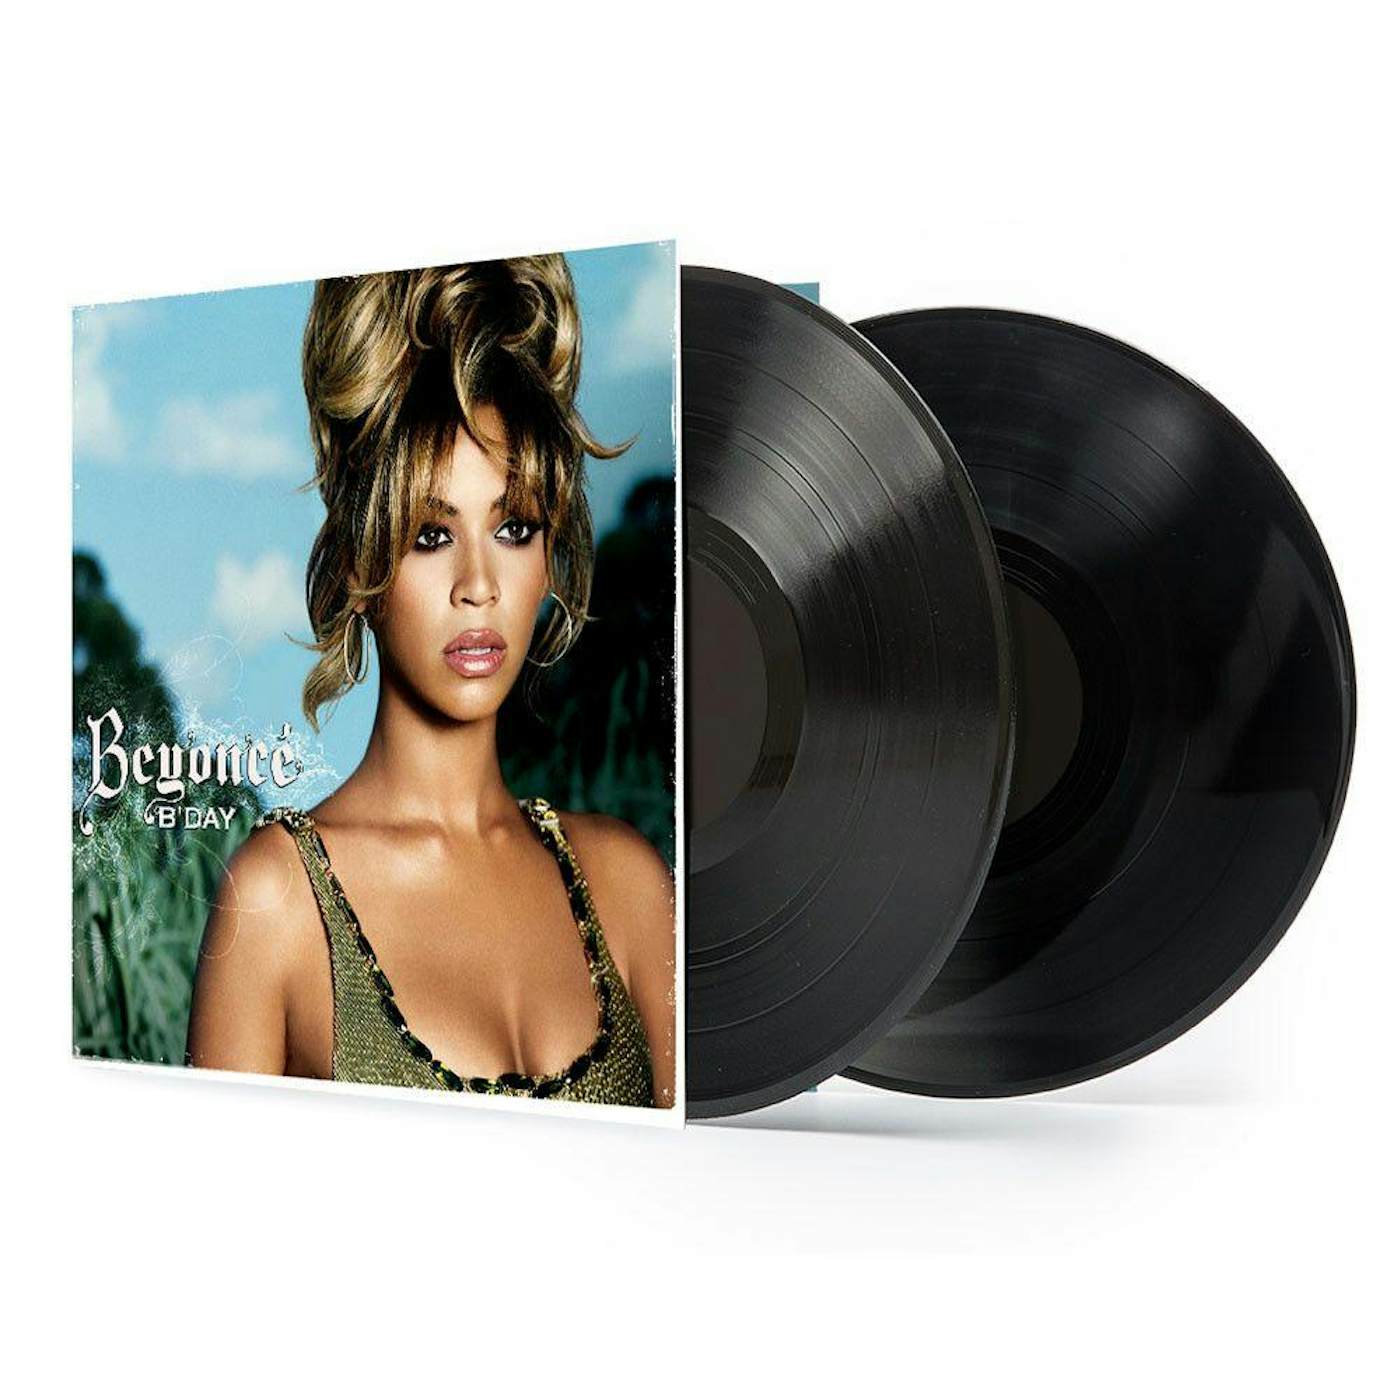 Vinilo Beyonce - B day - Audio Vintage MJ